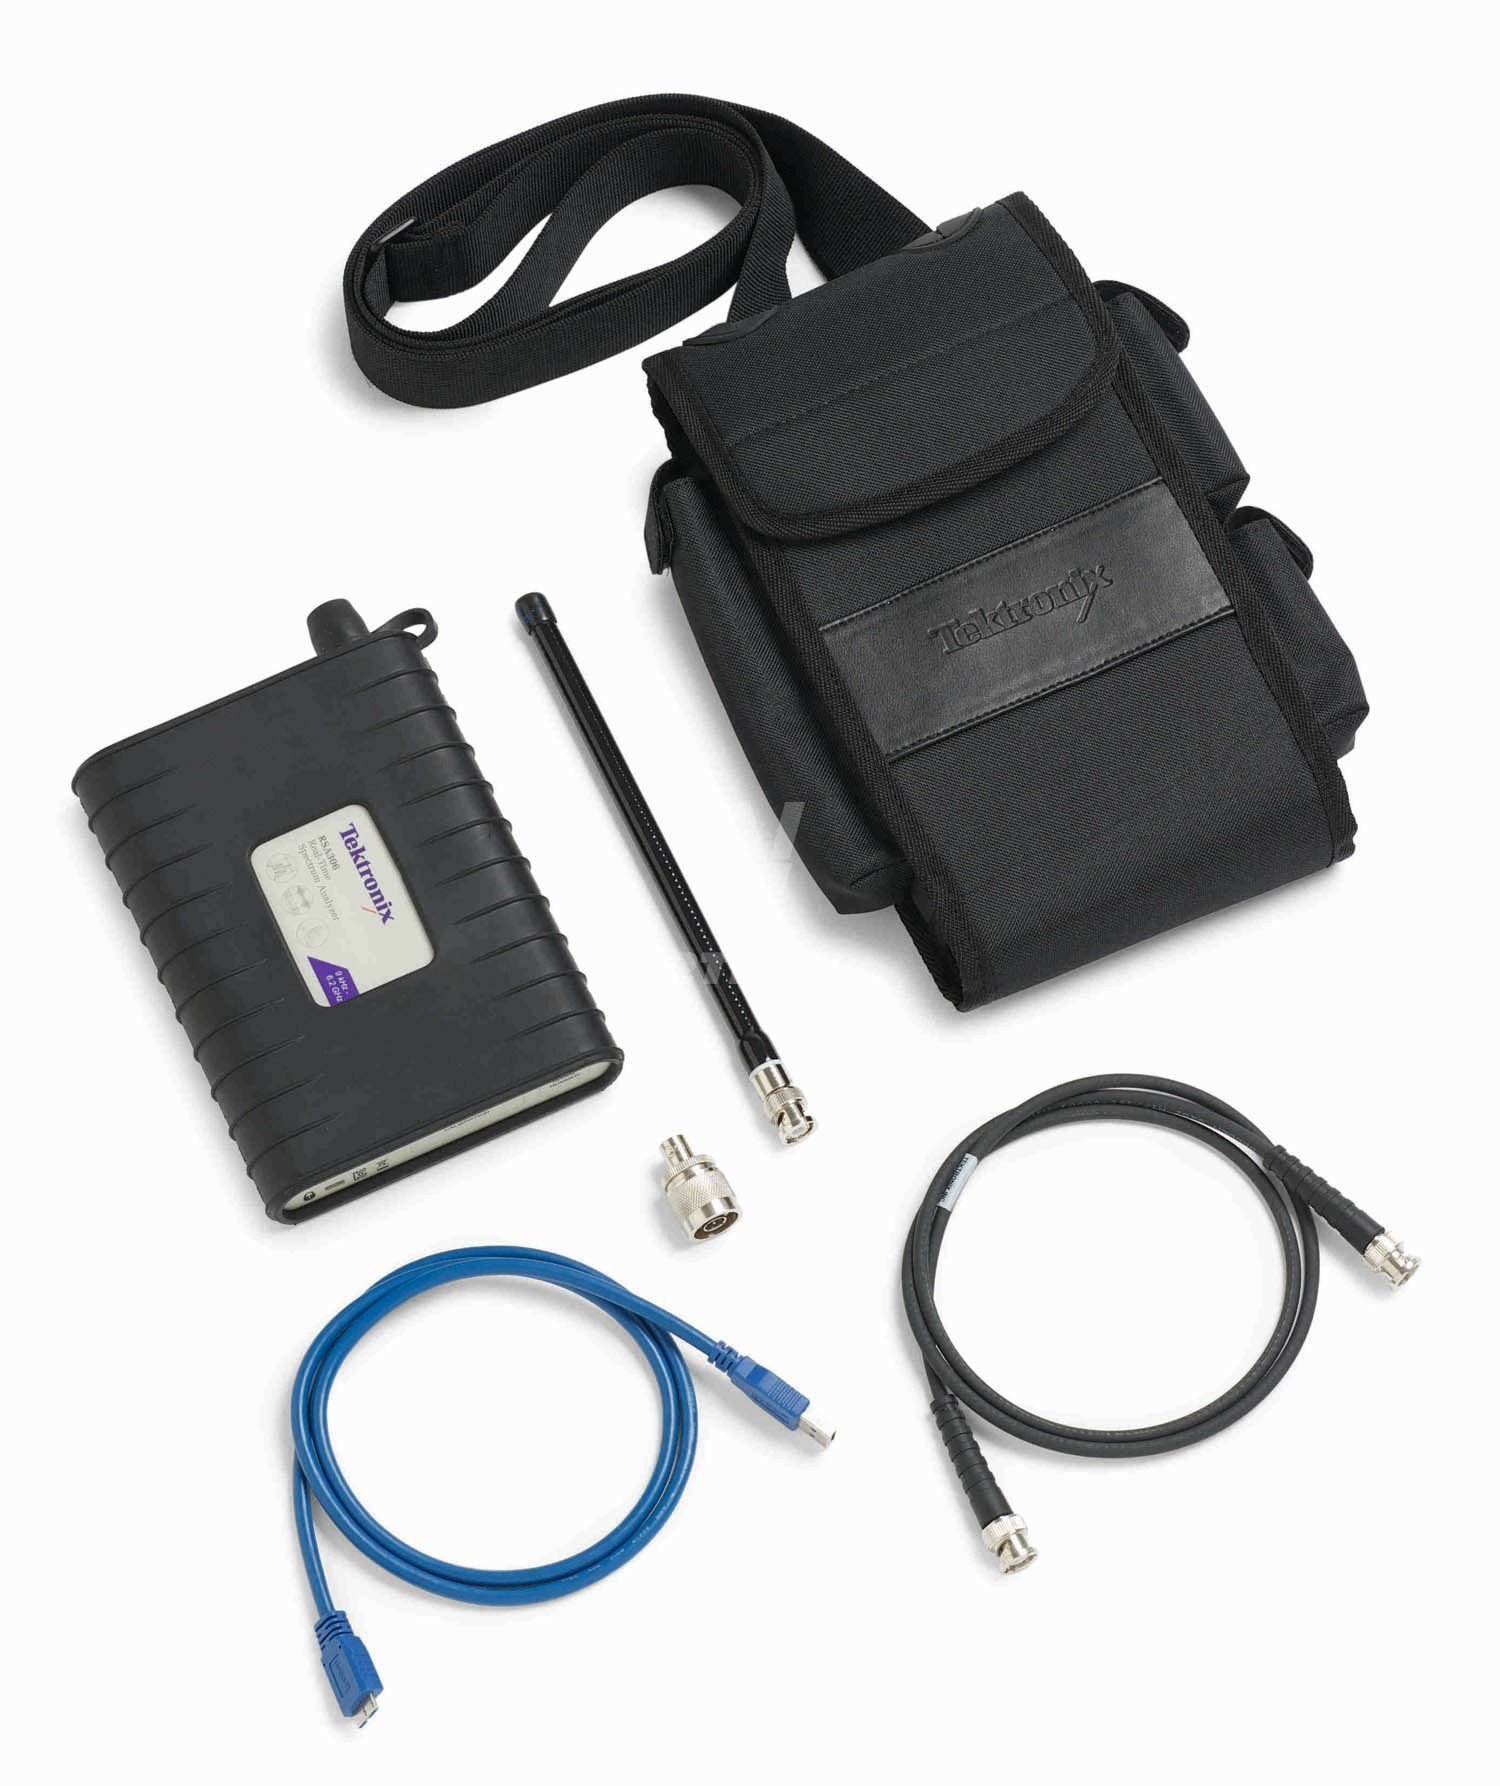 Описание USB-анализатор спектра Tektronix RSA306